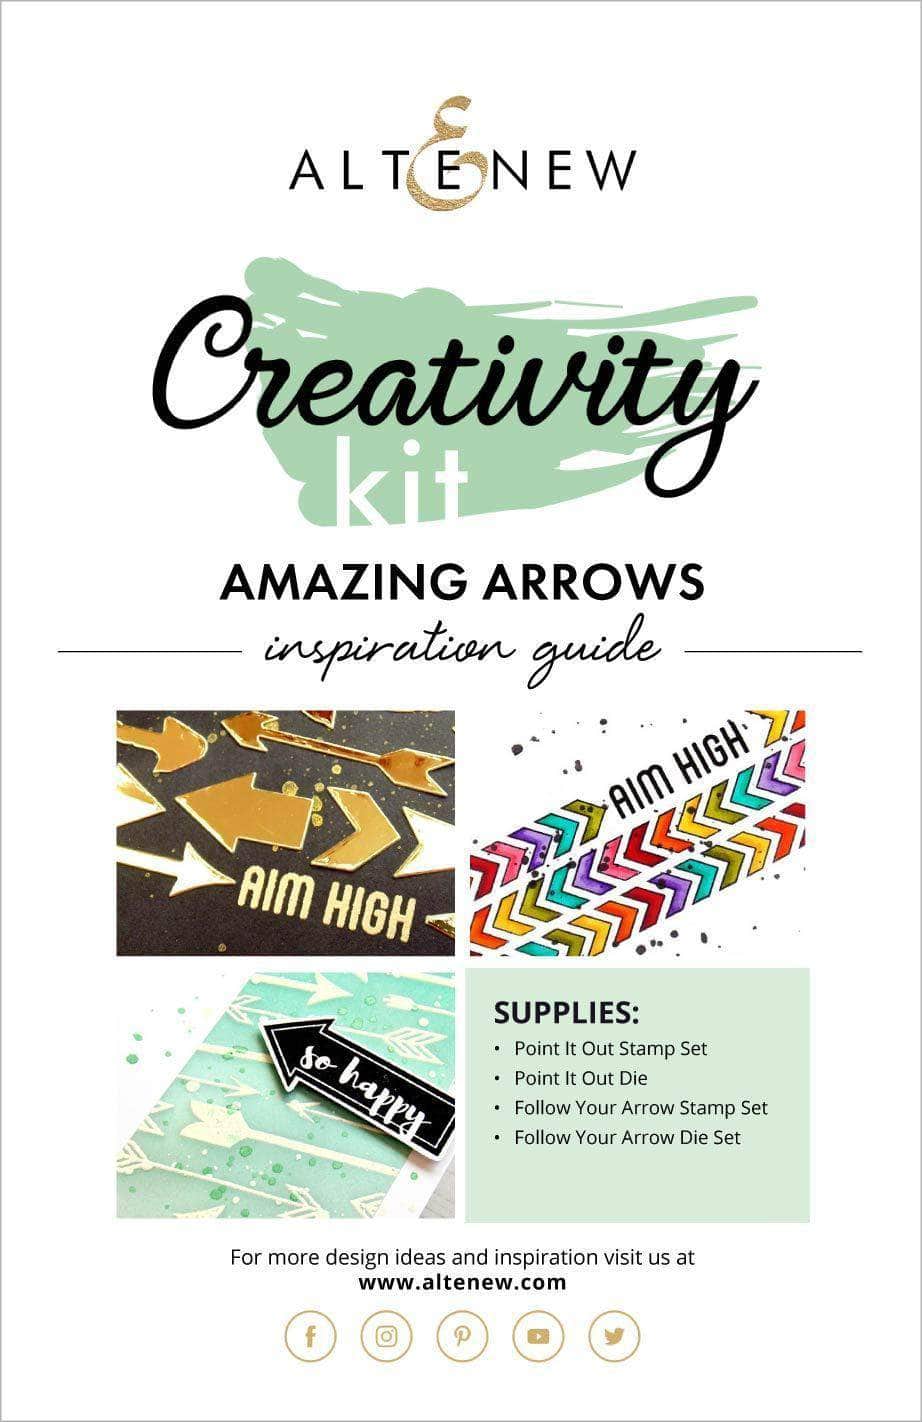 55Printing.com Printed Media Amazing Arrows Creativity Kit Inspiration Guide